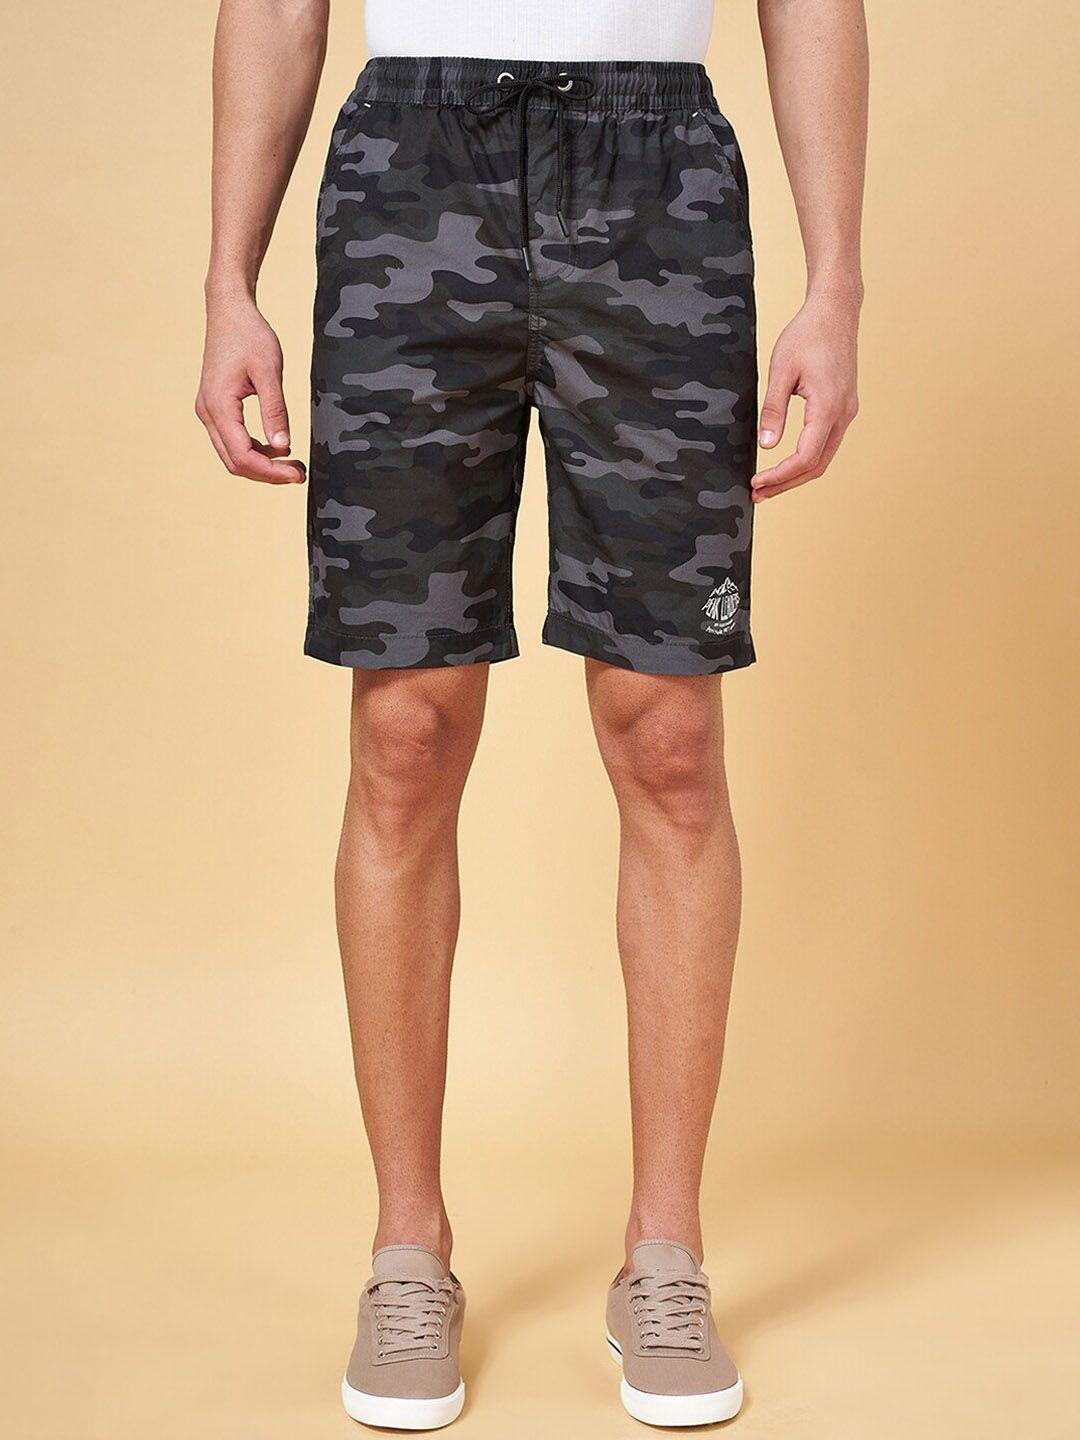 urban-ranger-by-pantaloons-men-slim-fit-camouflage-printed-mid-rise-cotton-shorts